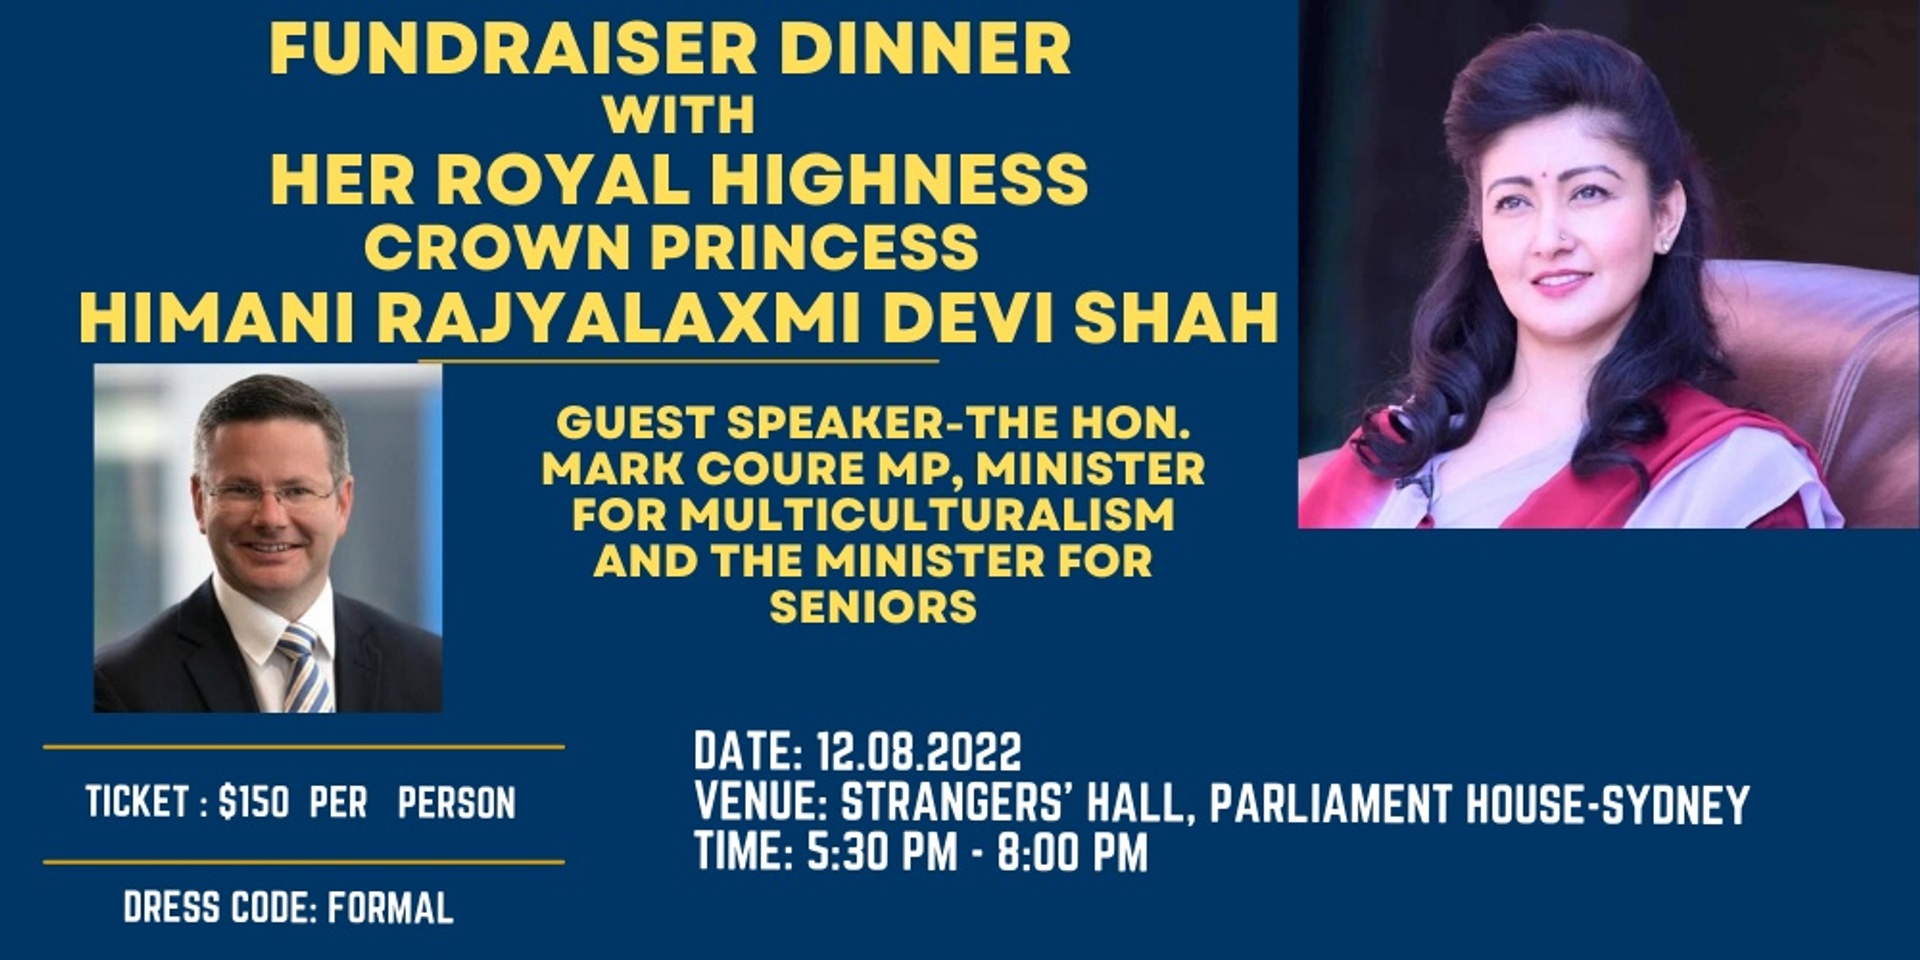 Fundraiser Dinner with Her Royal Highness Crown Princess Himani Rajyalaxmi Devi Shah